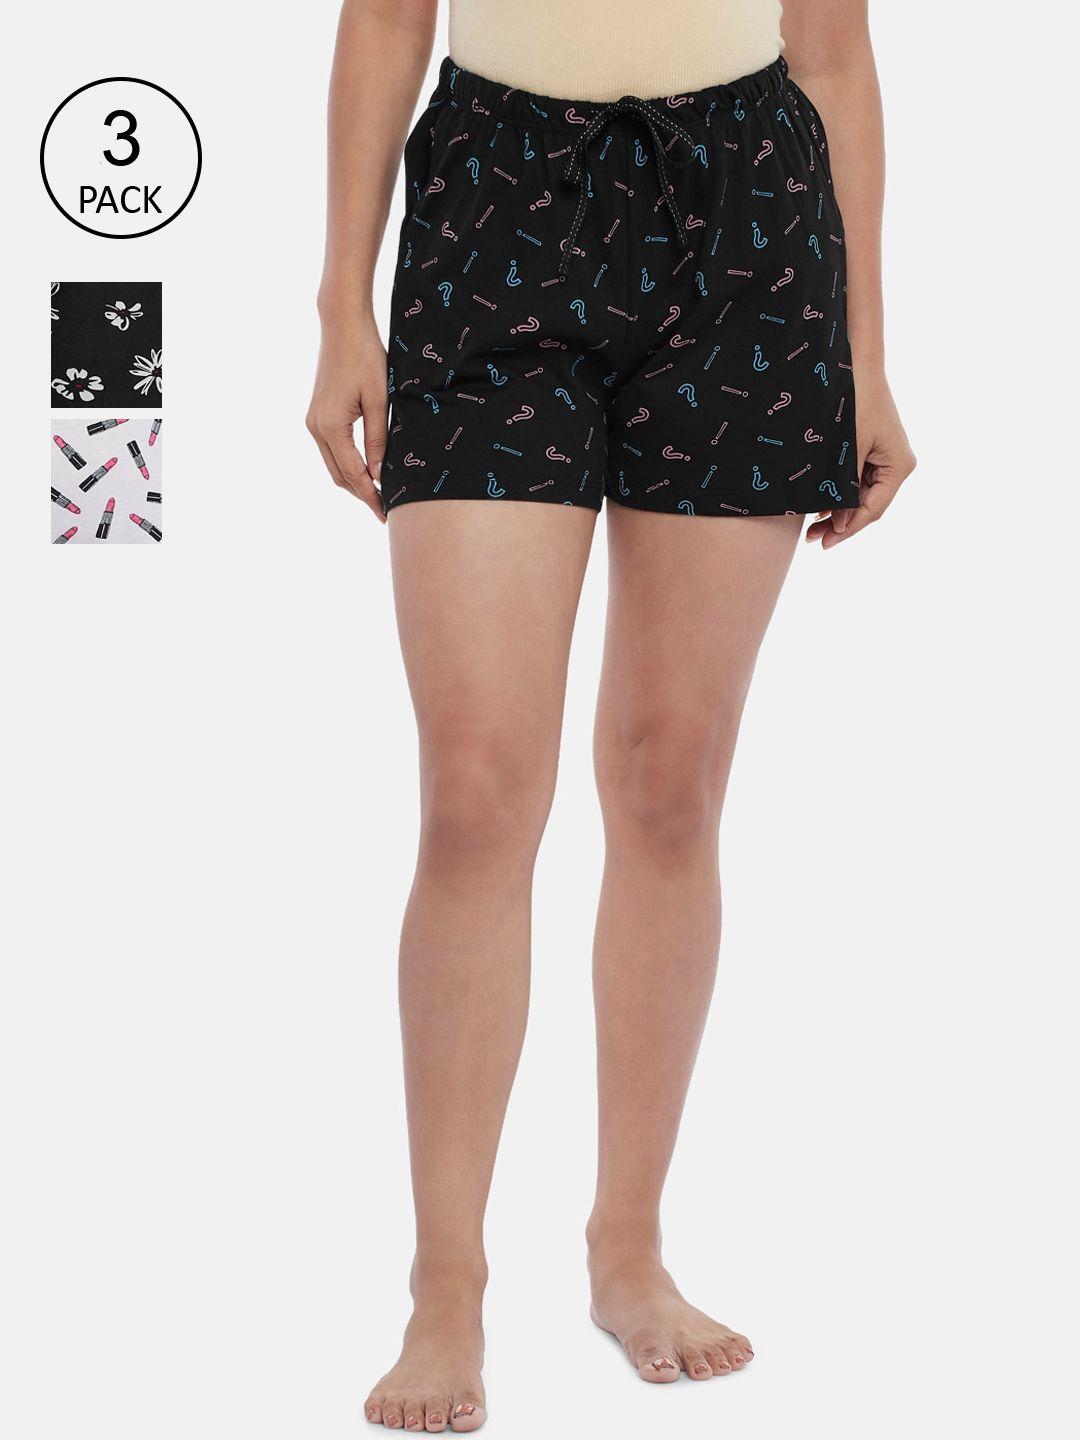 dreamz by pantaloons women black floral printed lounge shorts set of 3